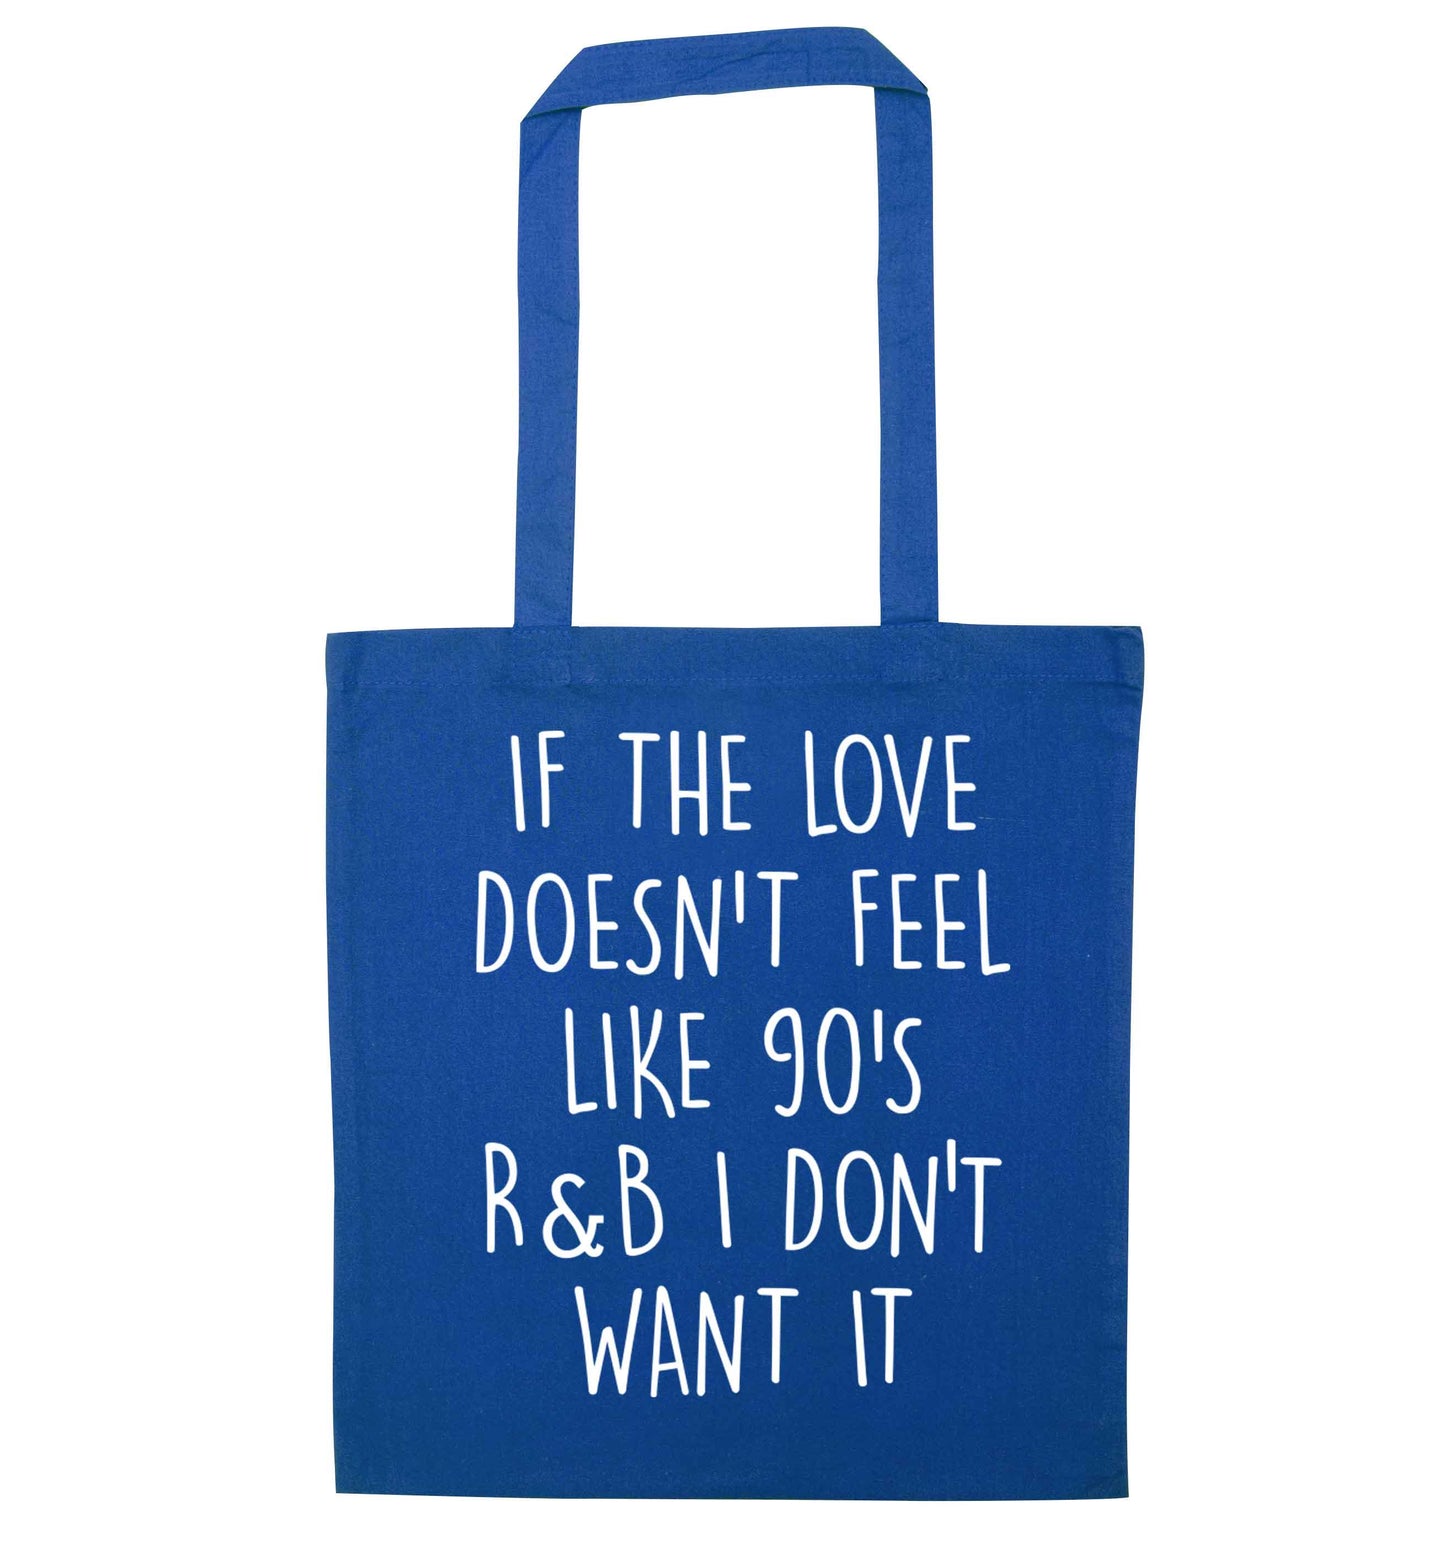 If the love doesn't feel like 90's r&b I don't want it blue tote bag